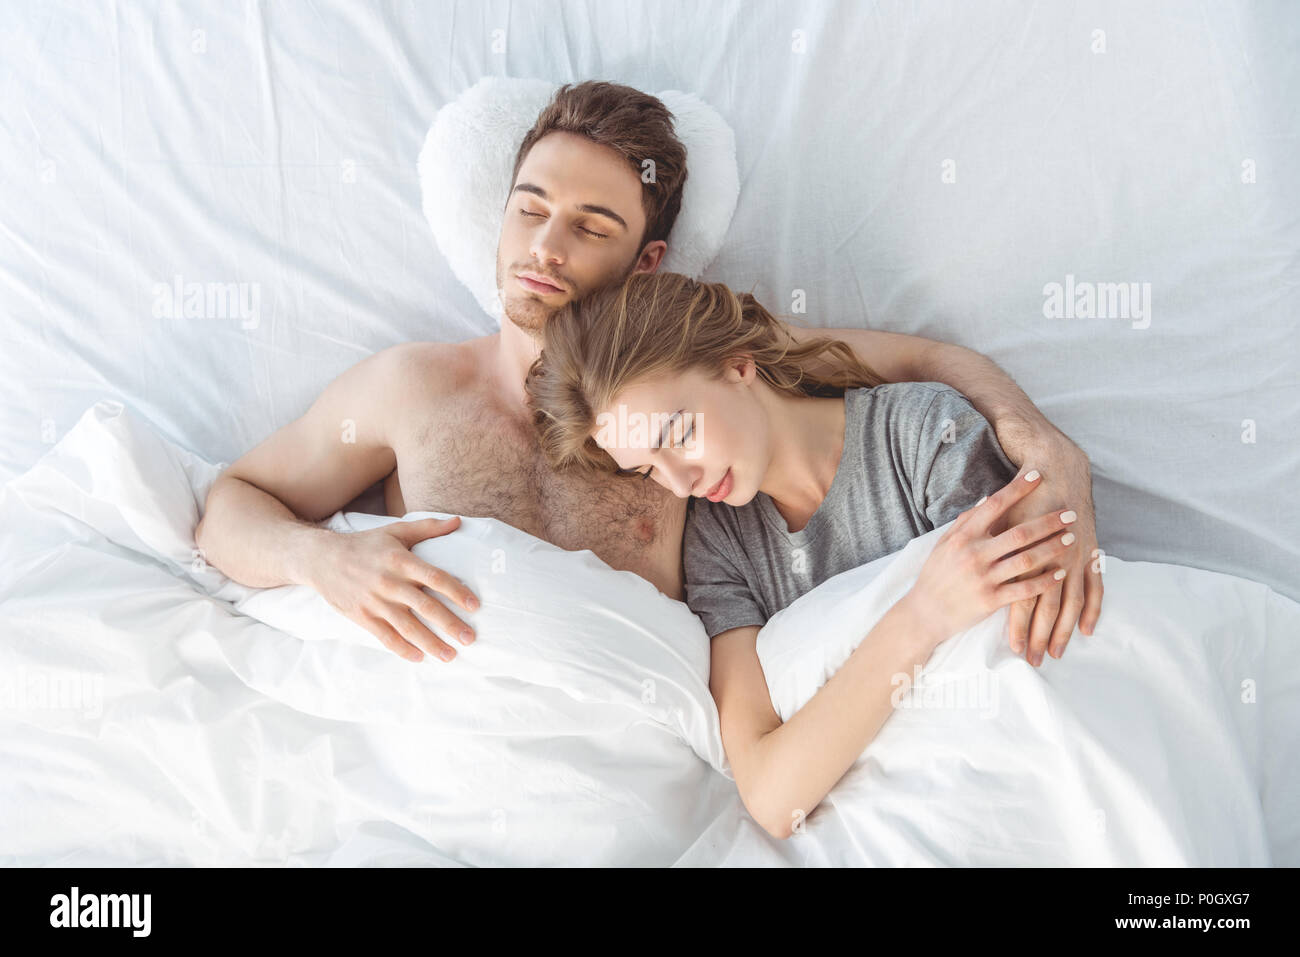 Couple Love Sleeping Bed Stock Photo 171326030